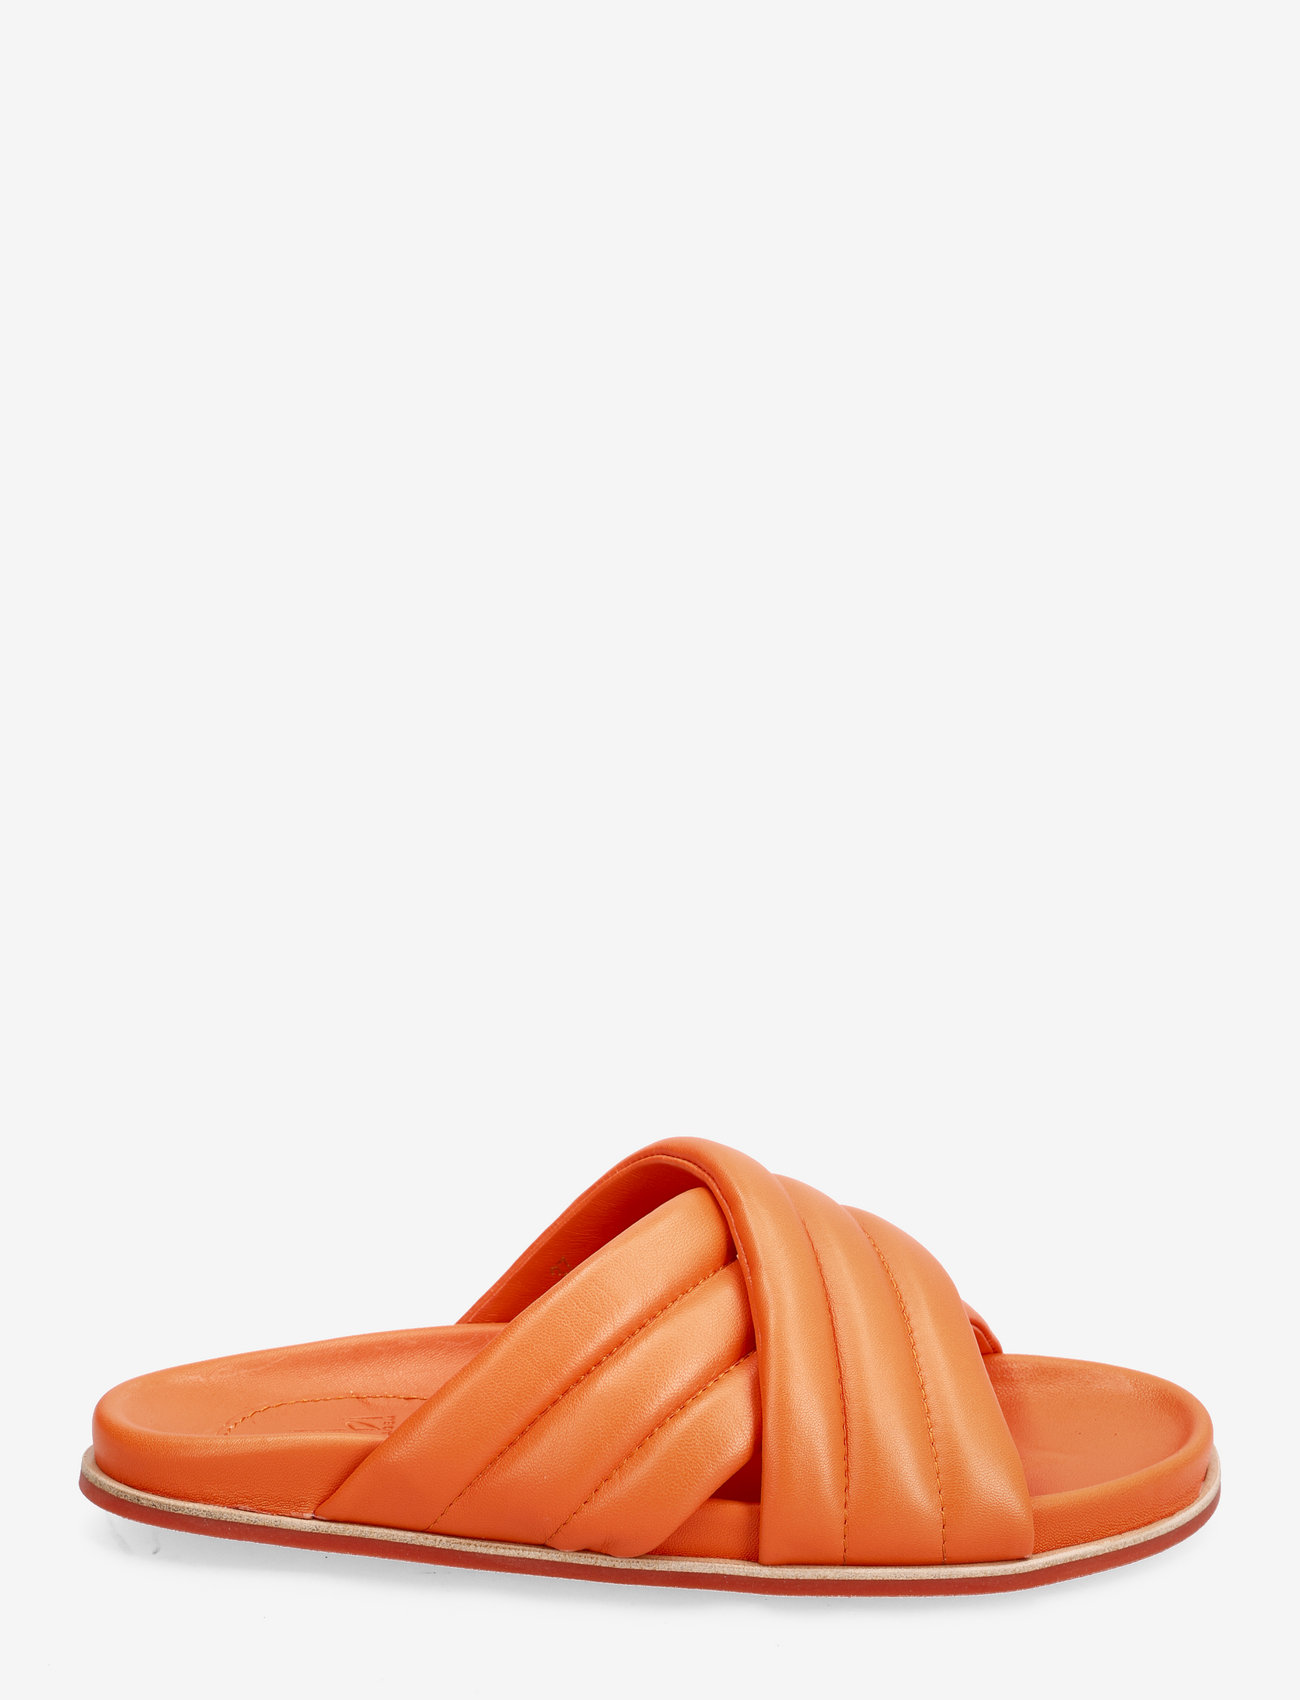 Billi Bi - C5573 - kontsata sandaalid - orange nappa - 1